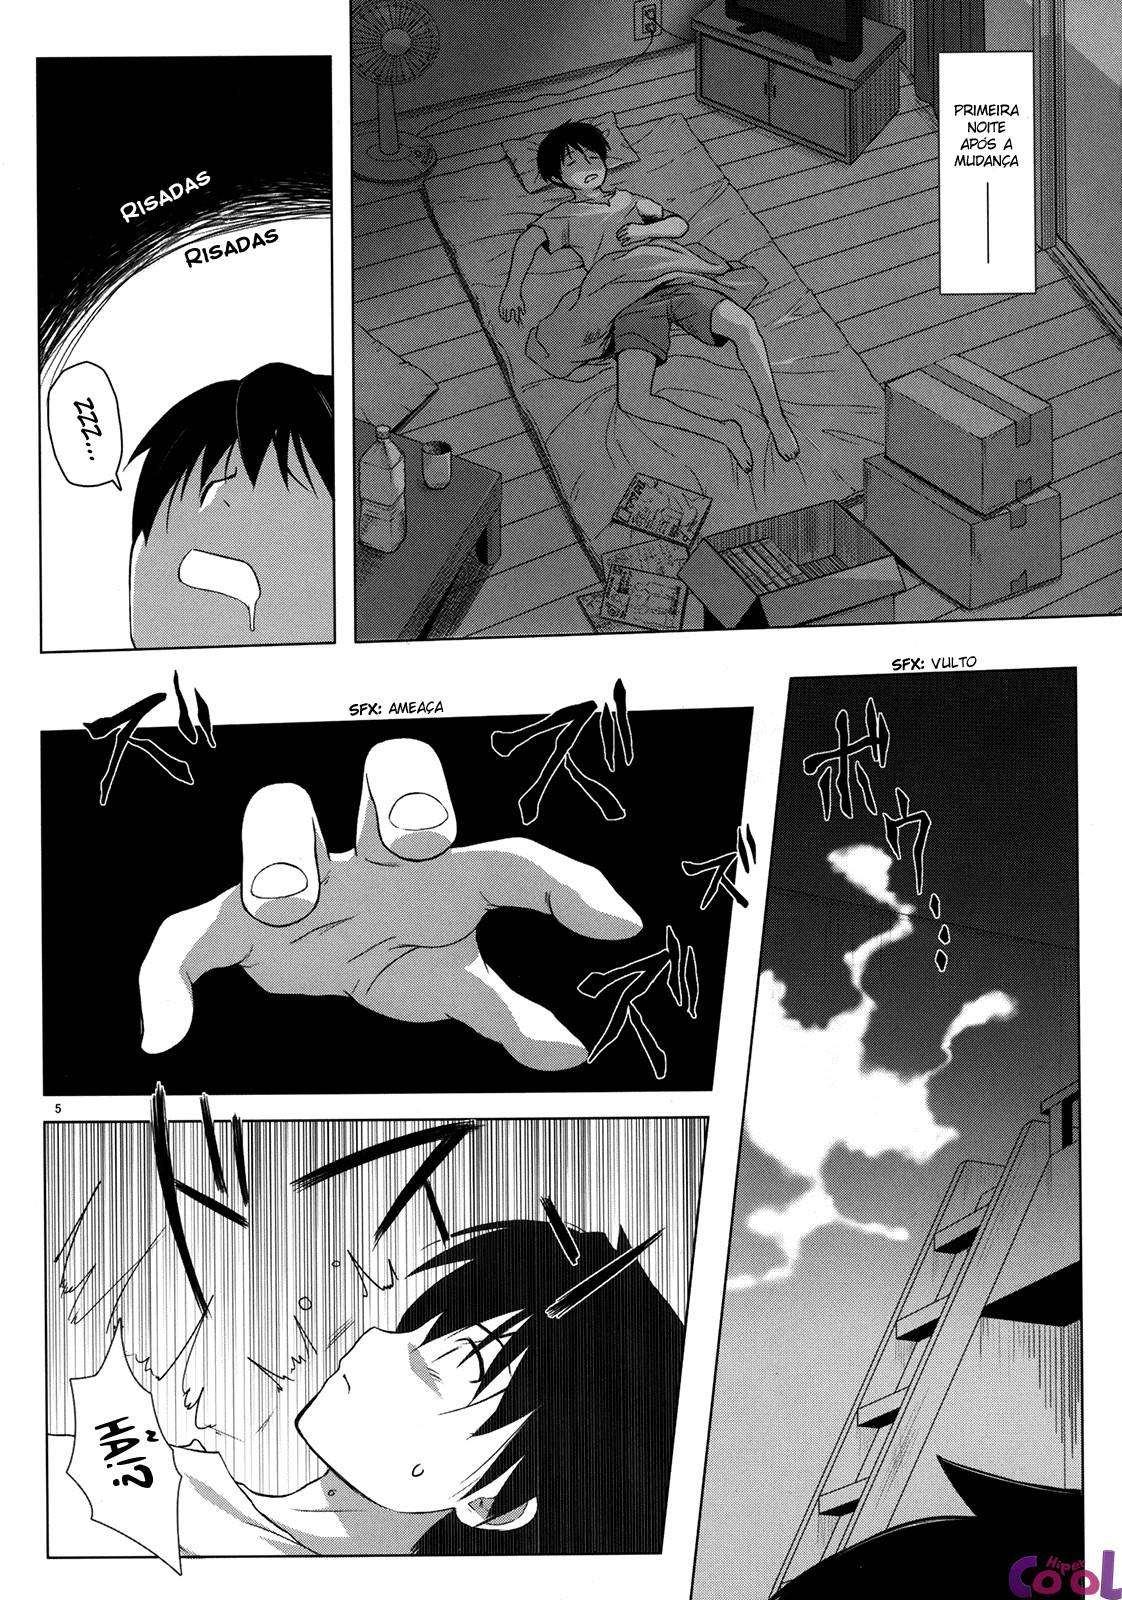 monokemono-shoya-chapter-01-page-04.jpg